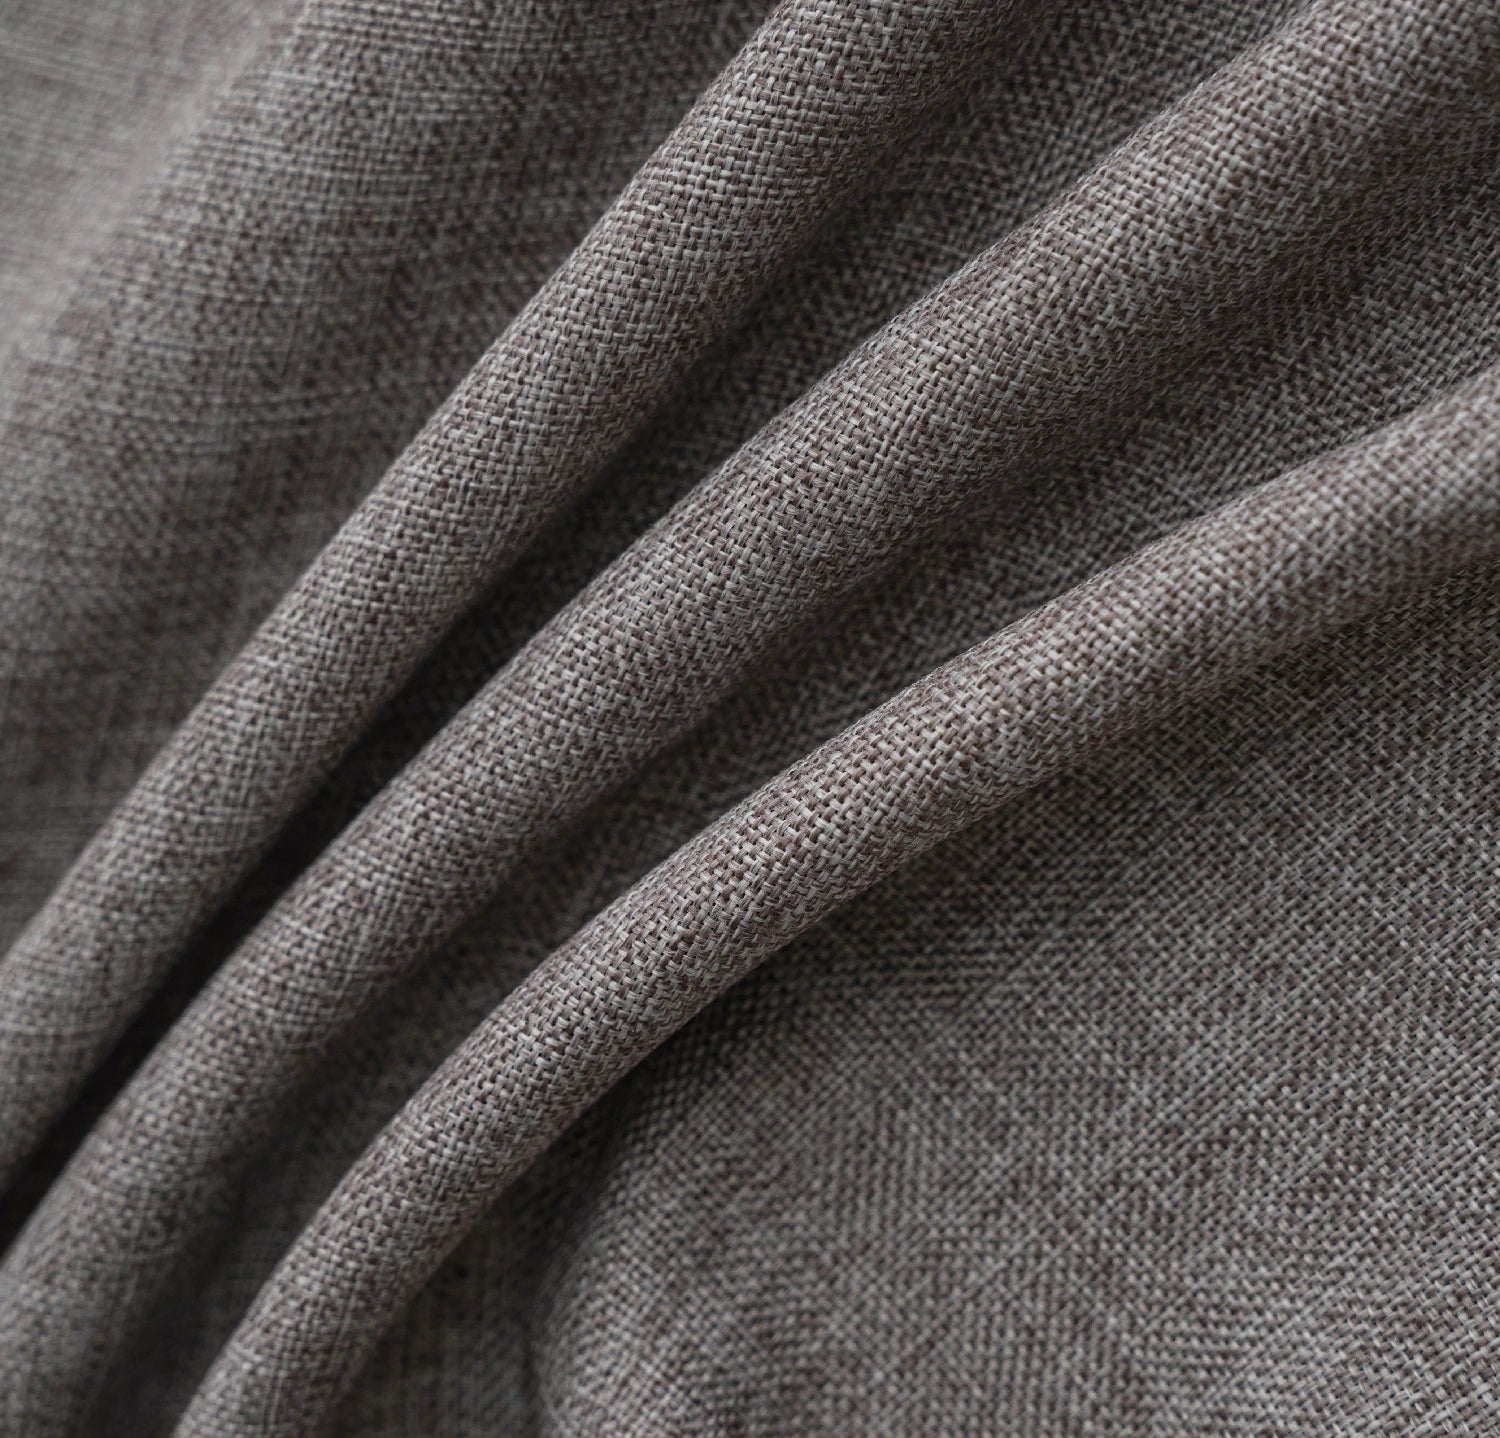 Dandelion Polyester Pinch Pleat Drapery Custom Curtains Blackout Curtains Dark Gray